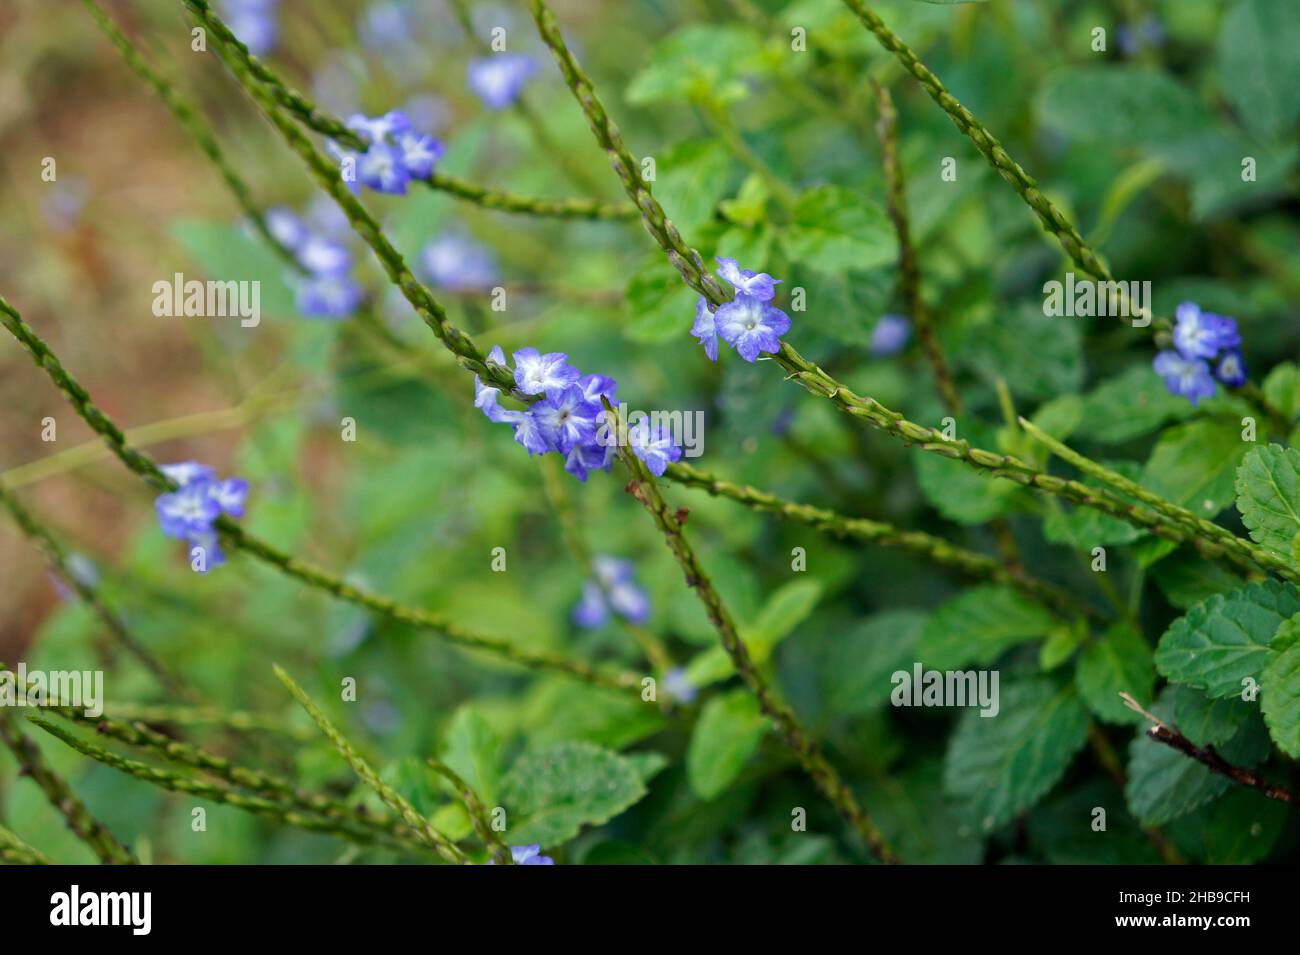 Blue snakeweed flowers (Stachytarpheta cayennensis) Stock Photo